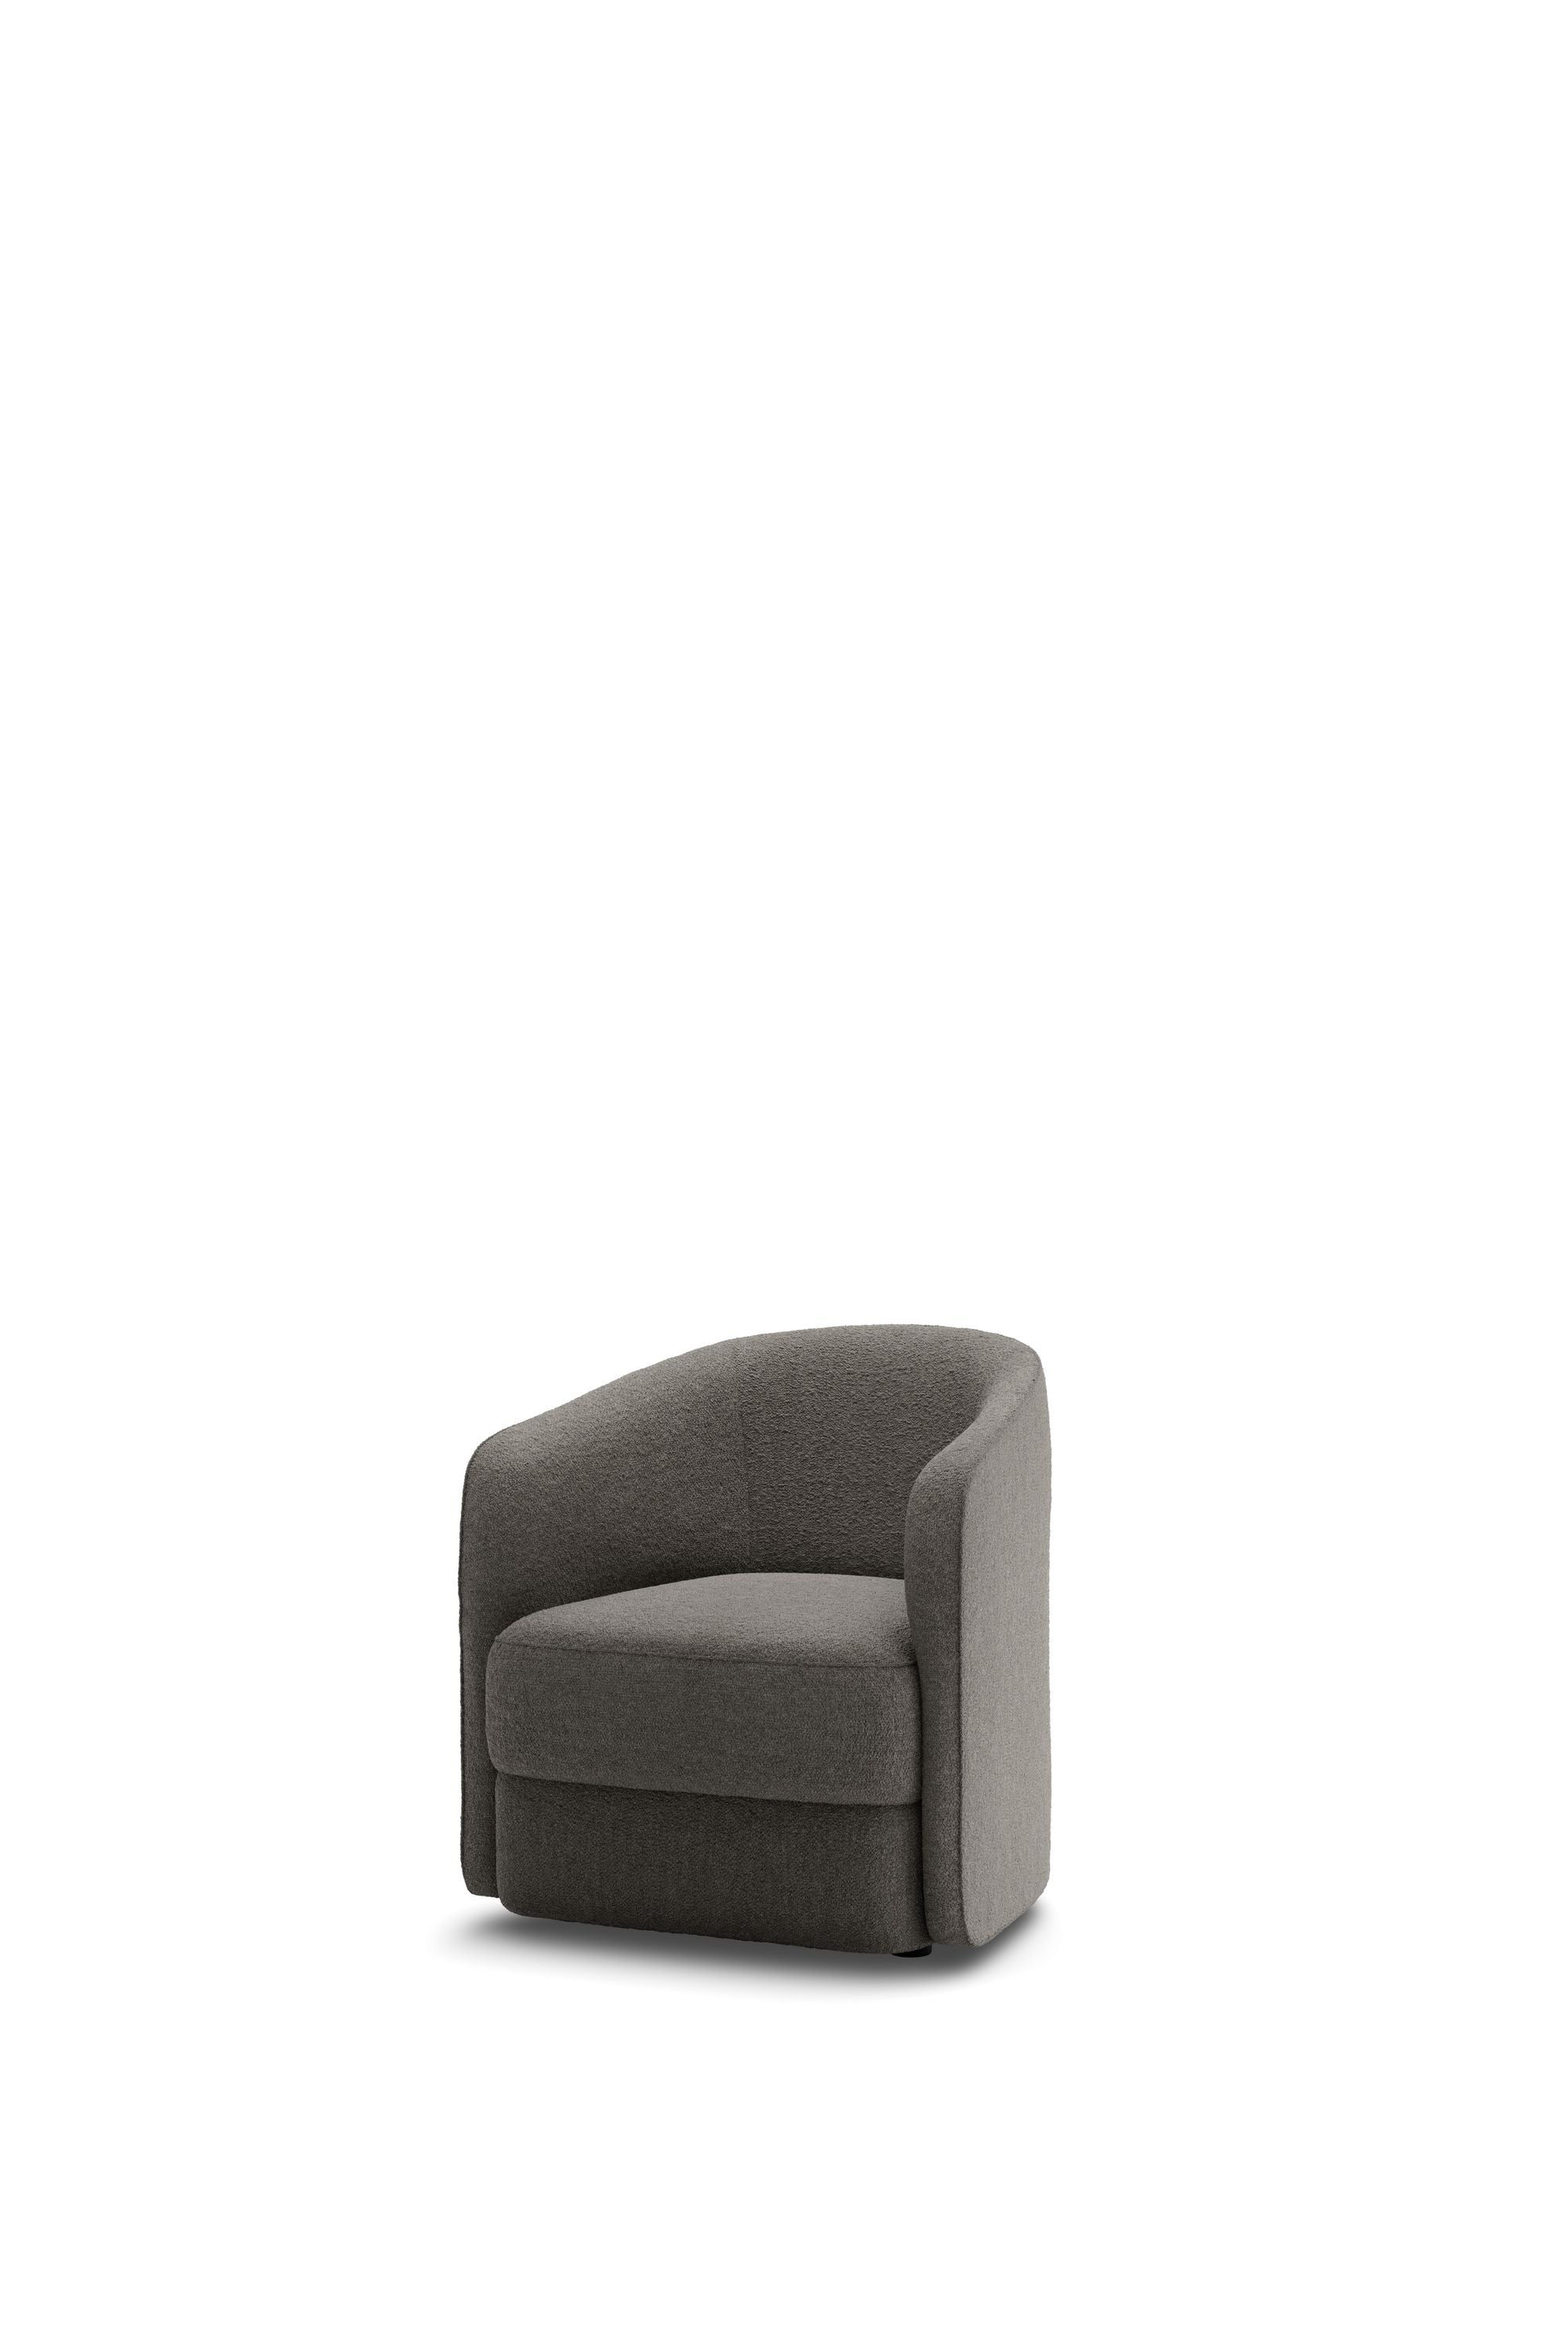 新作品Covent Lounge椅子狭窄，深色灰褐色